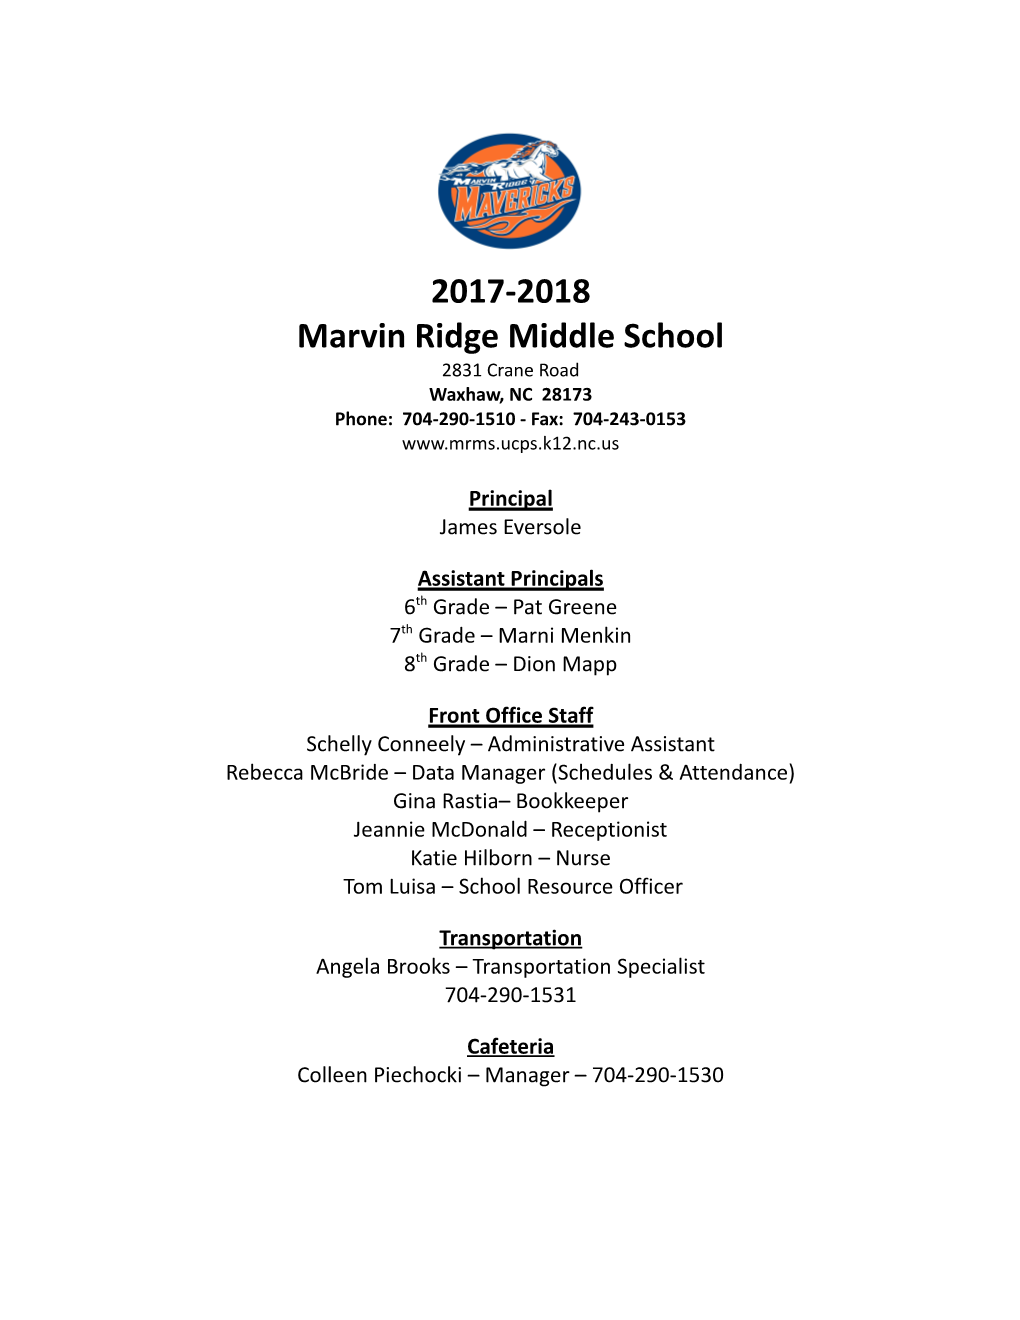 Marvin Ridge Middle School